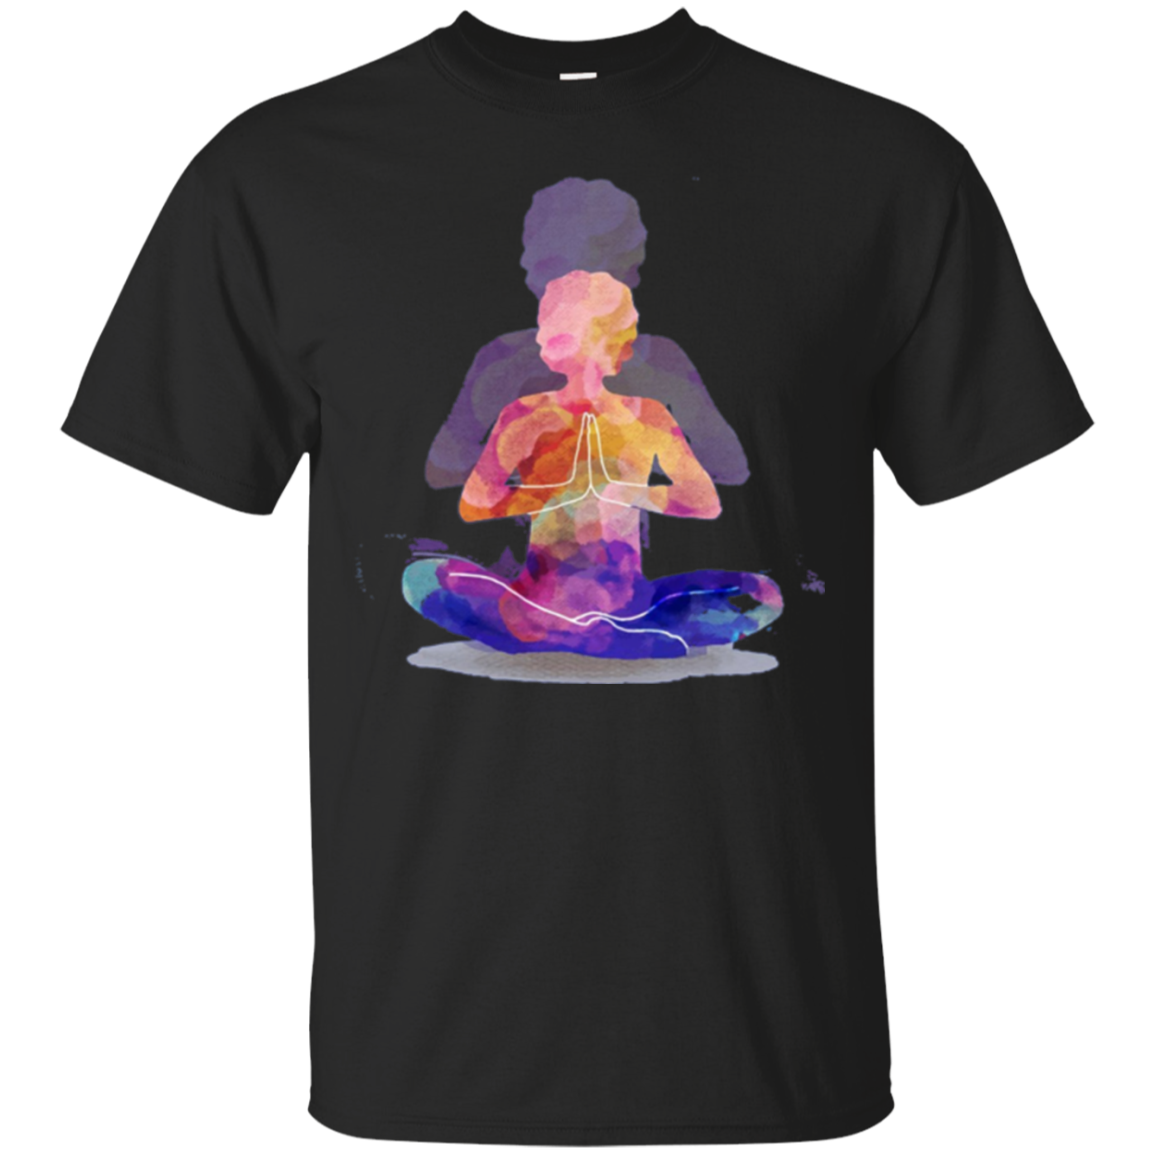 Meditation In Yoga Pose With Prayer Hand T-shirt